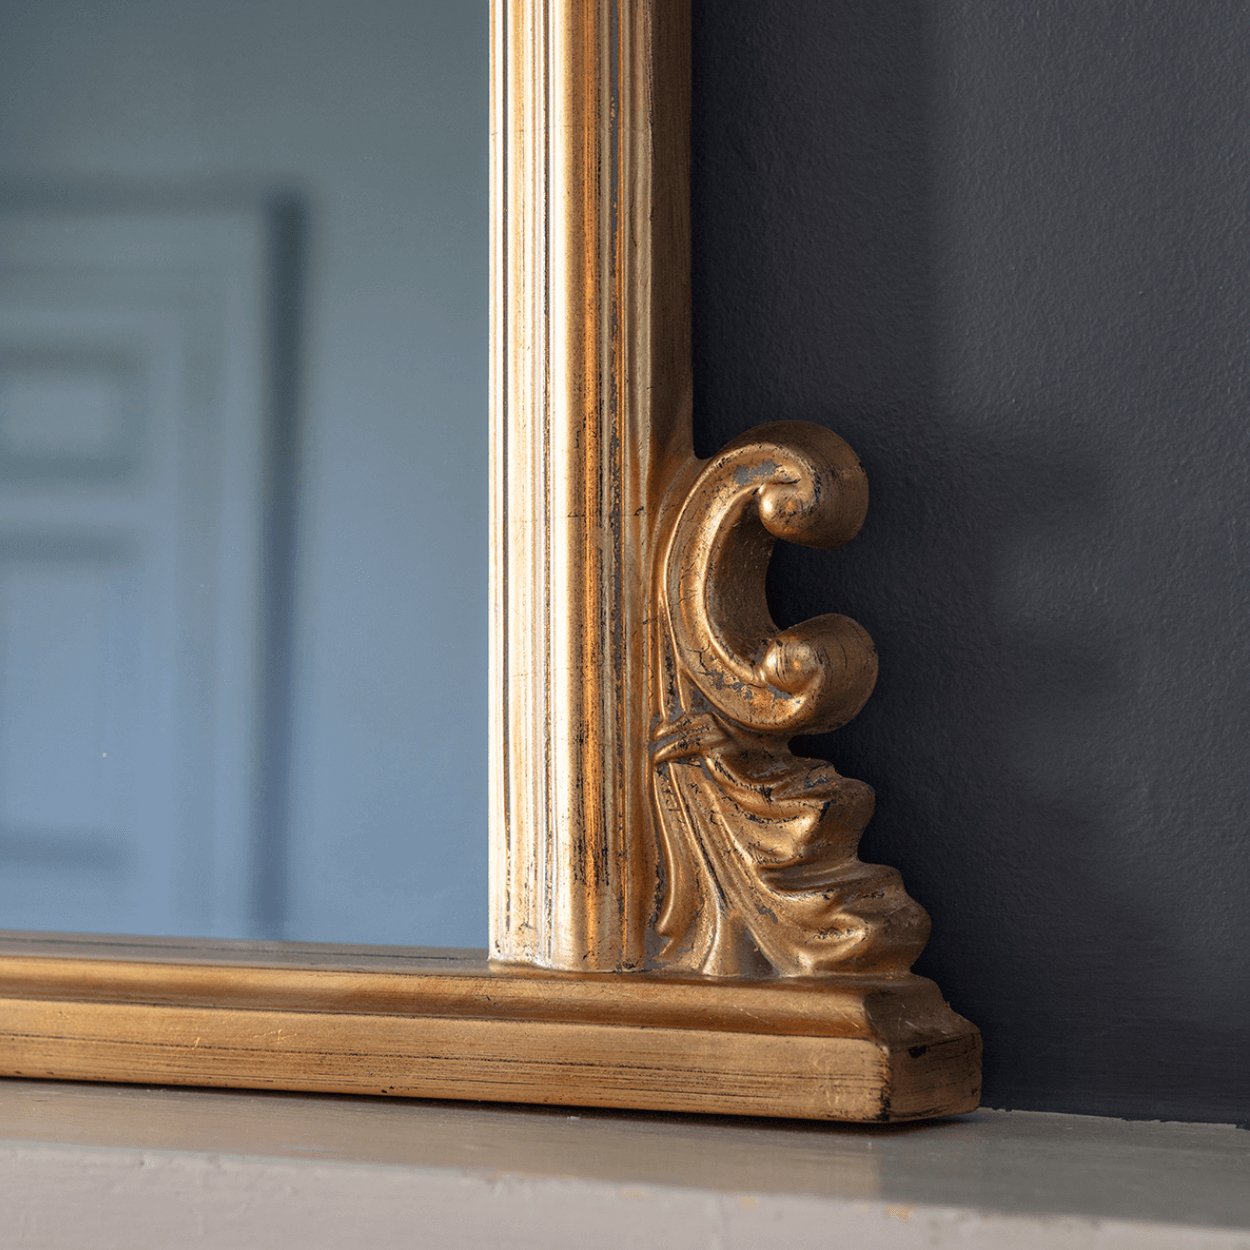 thornby gold mirror close up of decorative corner